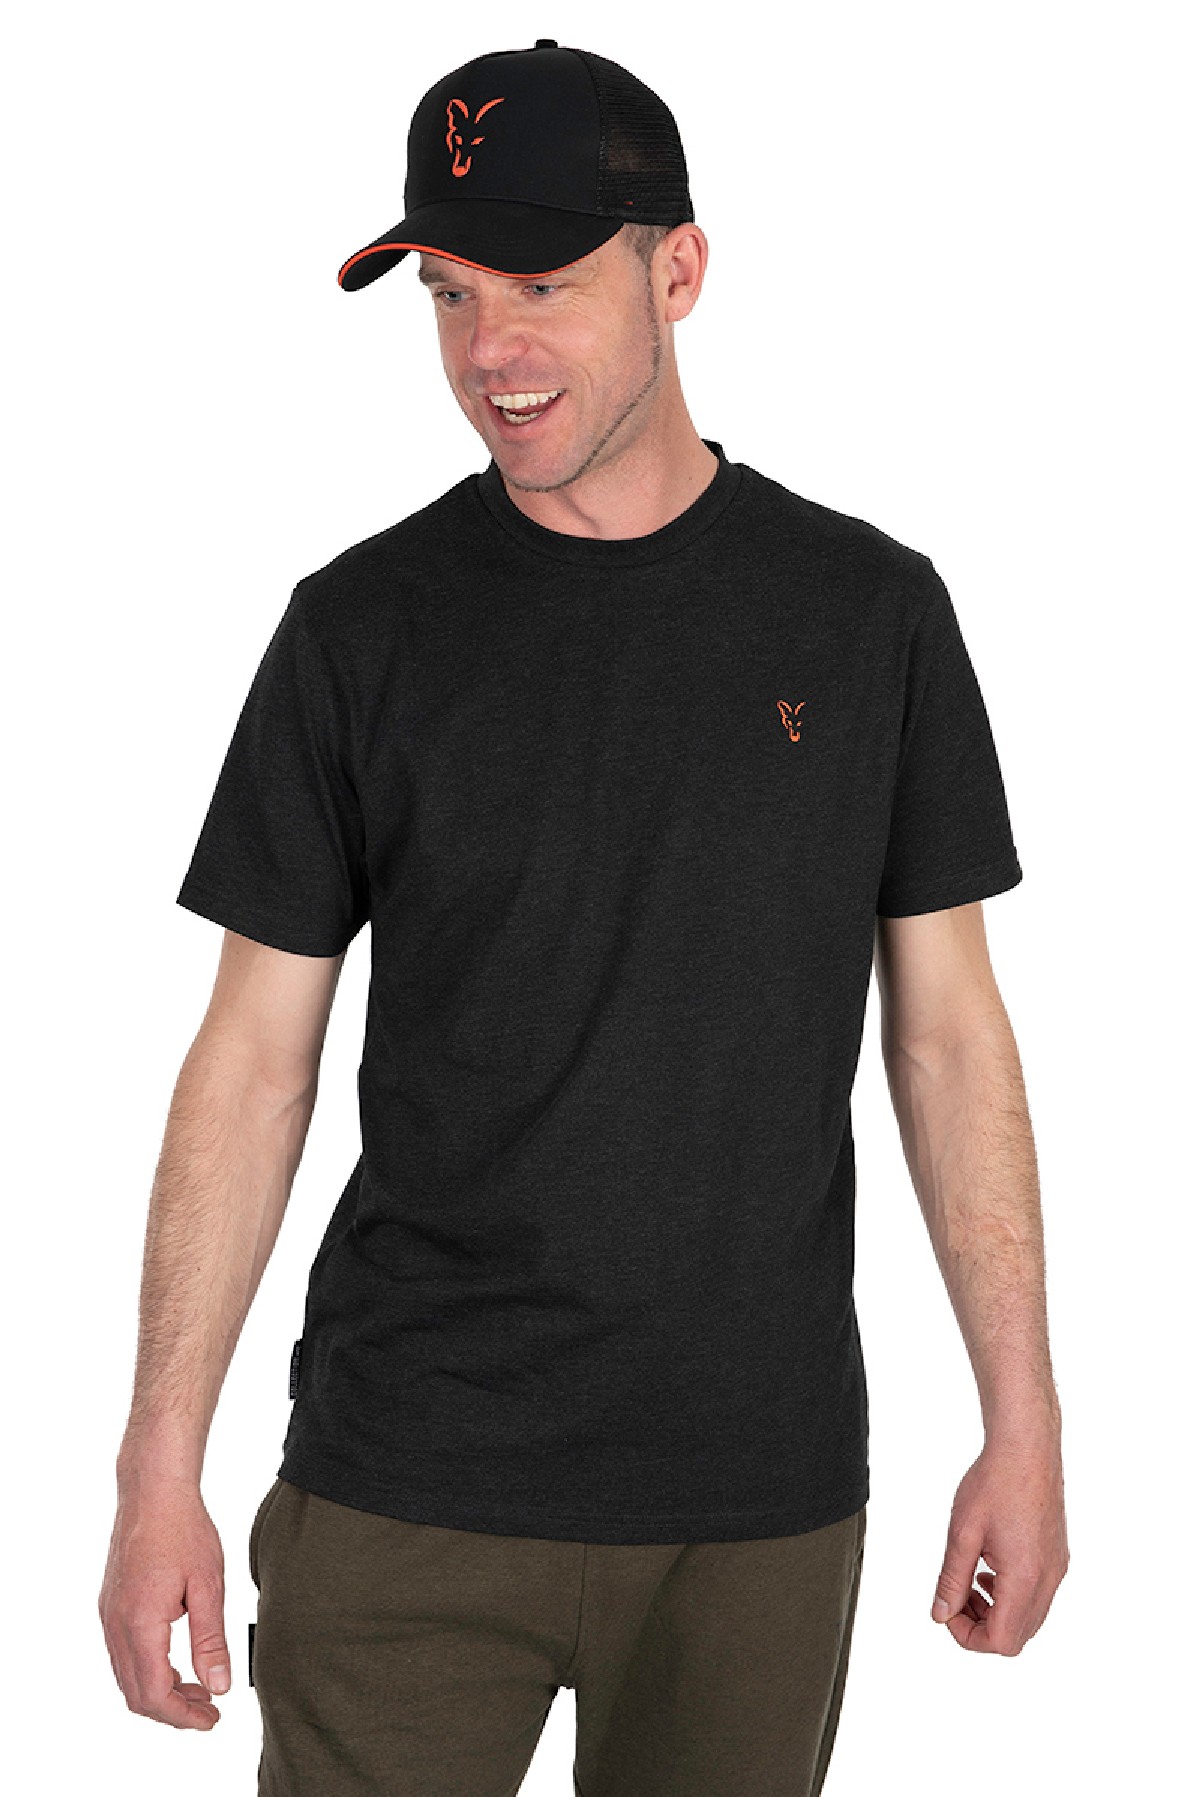 Fox Collection T-Shirt Black & Orange Small